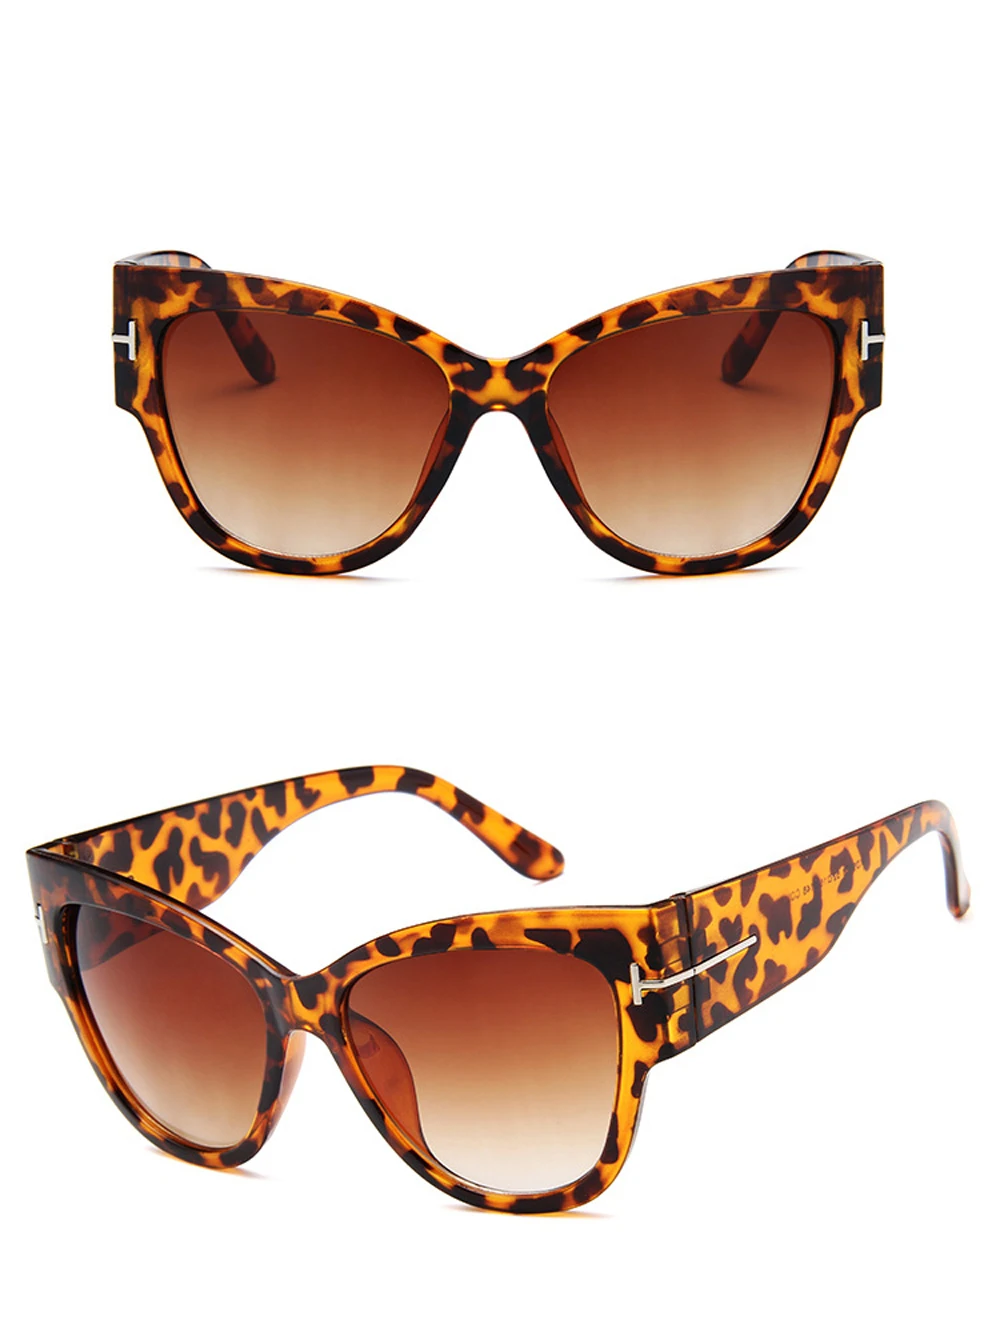 MUSELIFE New Fashion Brand Designer Cat Eye Women Sunglasses Female Gradient Points Sun Glasses Big Oculos feminino de sol UV400 cute sunglasses